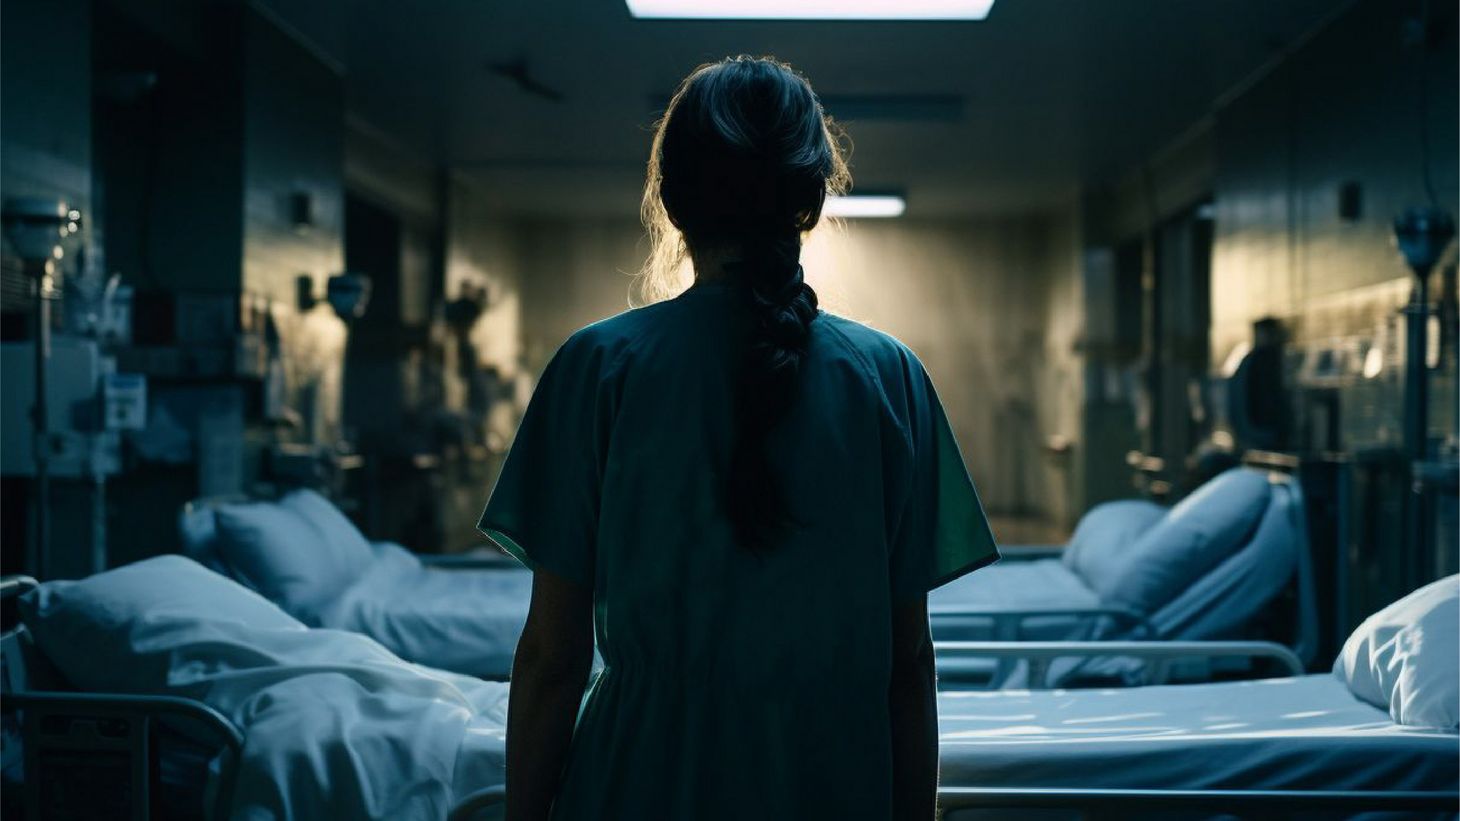 nurse standing in darkly lit room in front of empty hospital beds